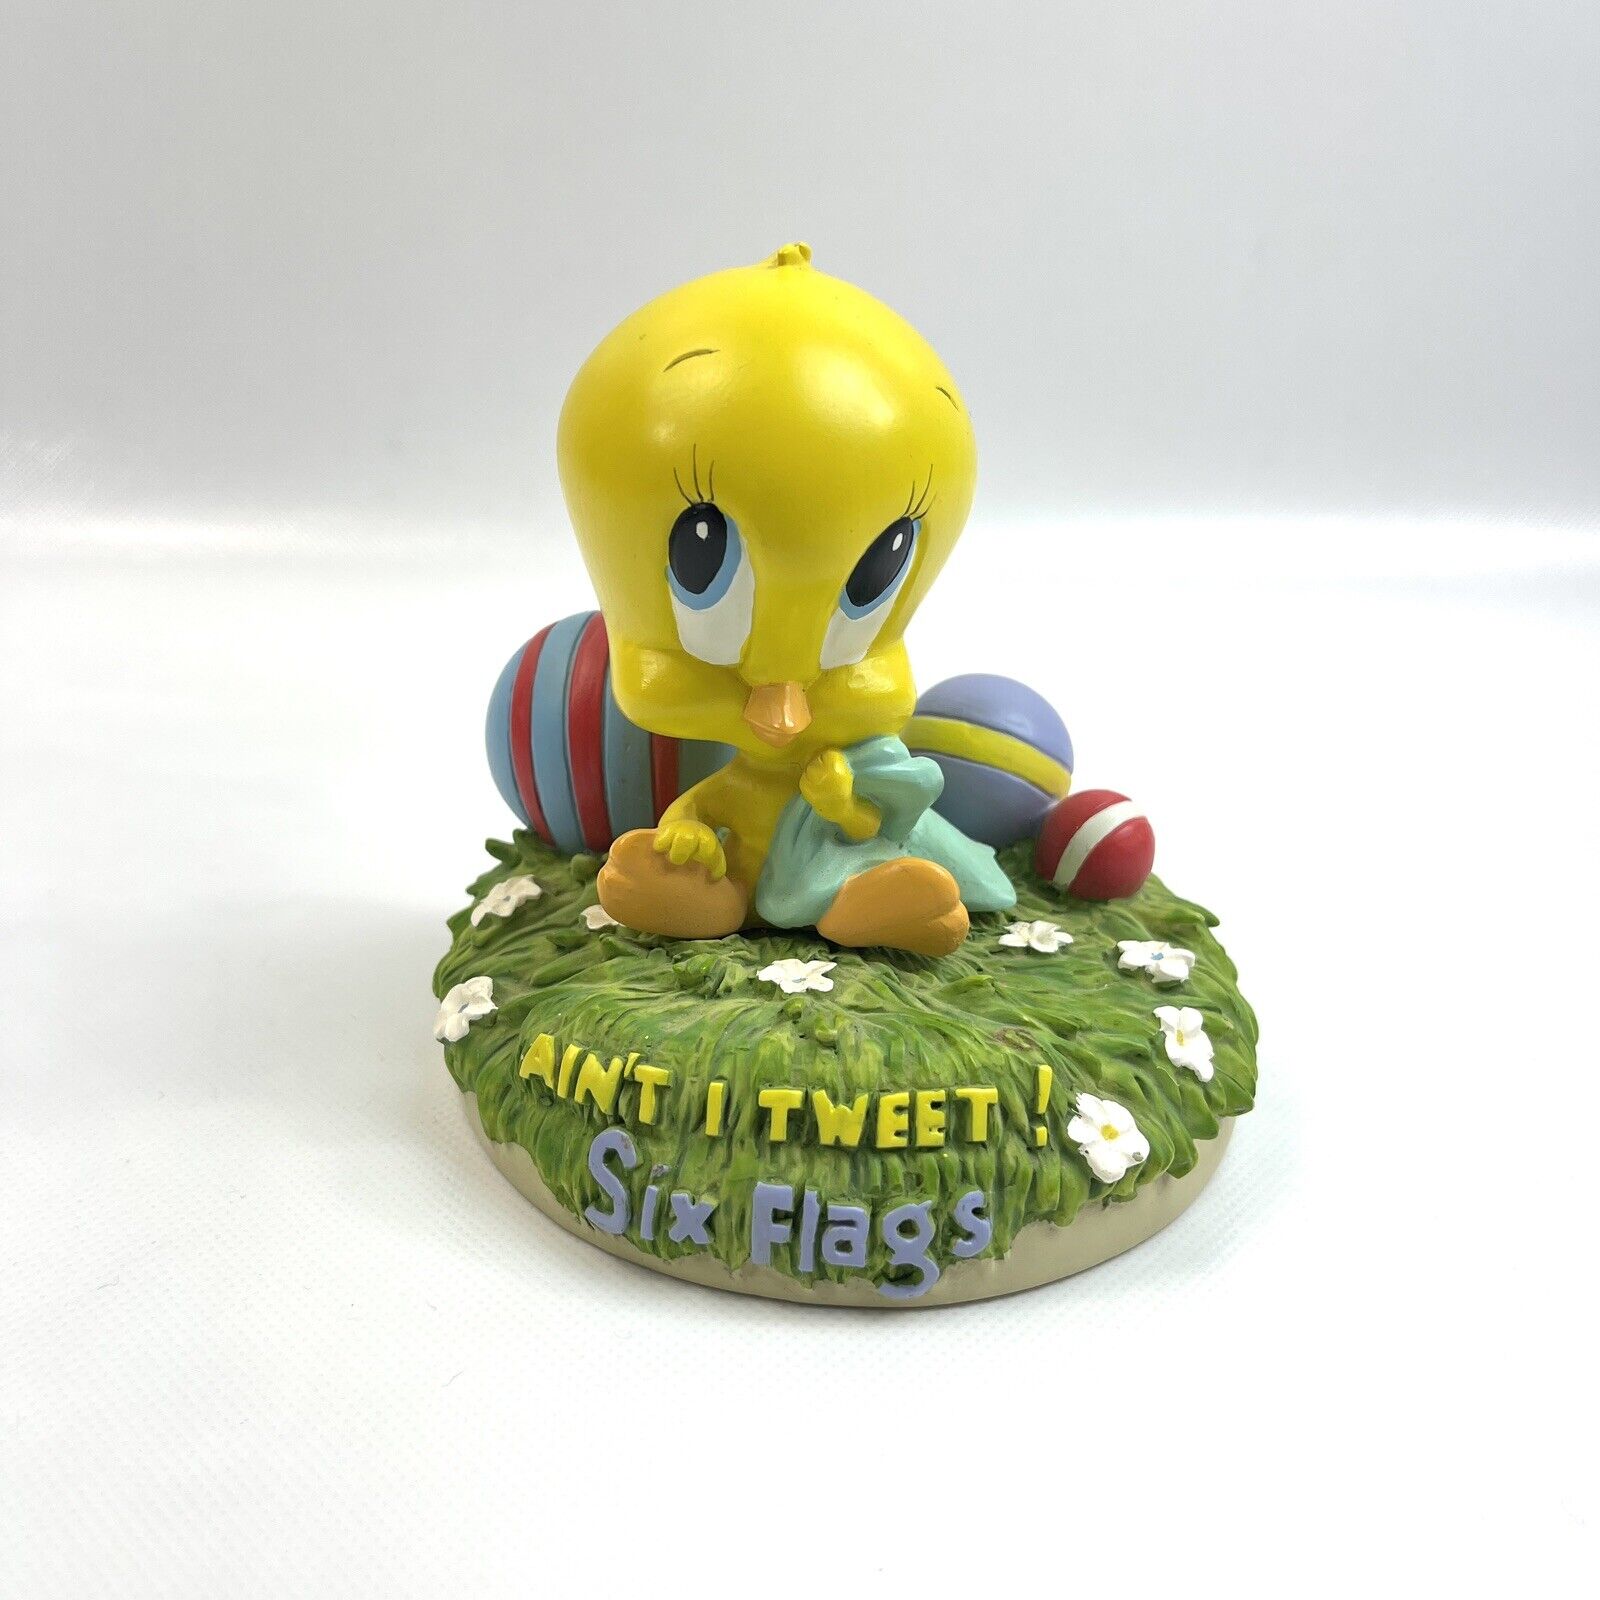 Looney Tunes Tweety Six Flags Ain't I Tweet Special Edition Figurine 1997 Rare